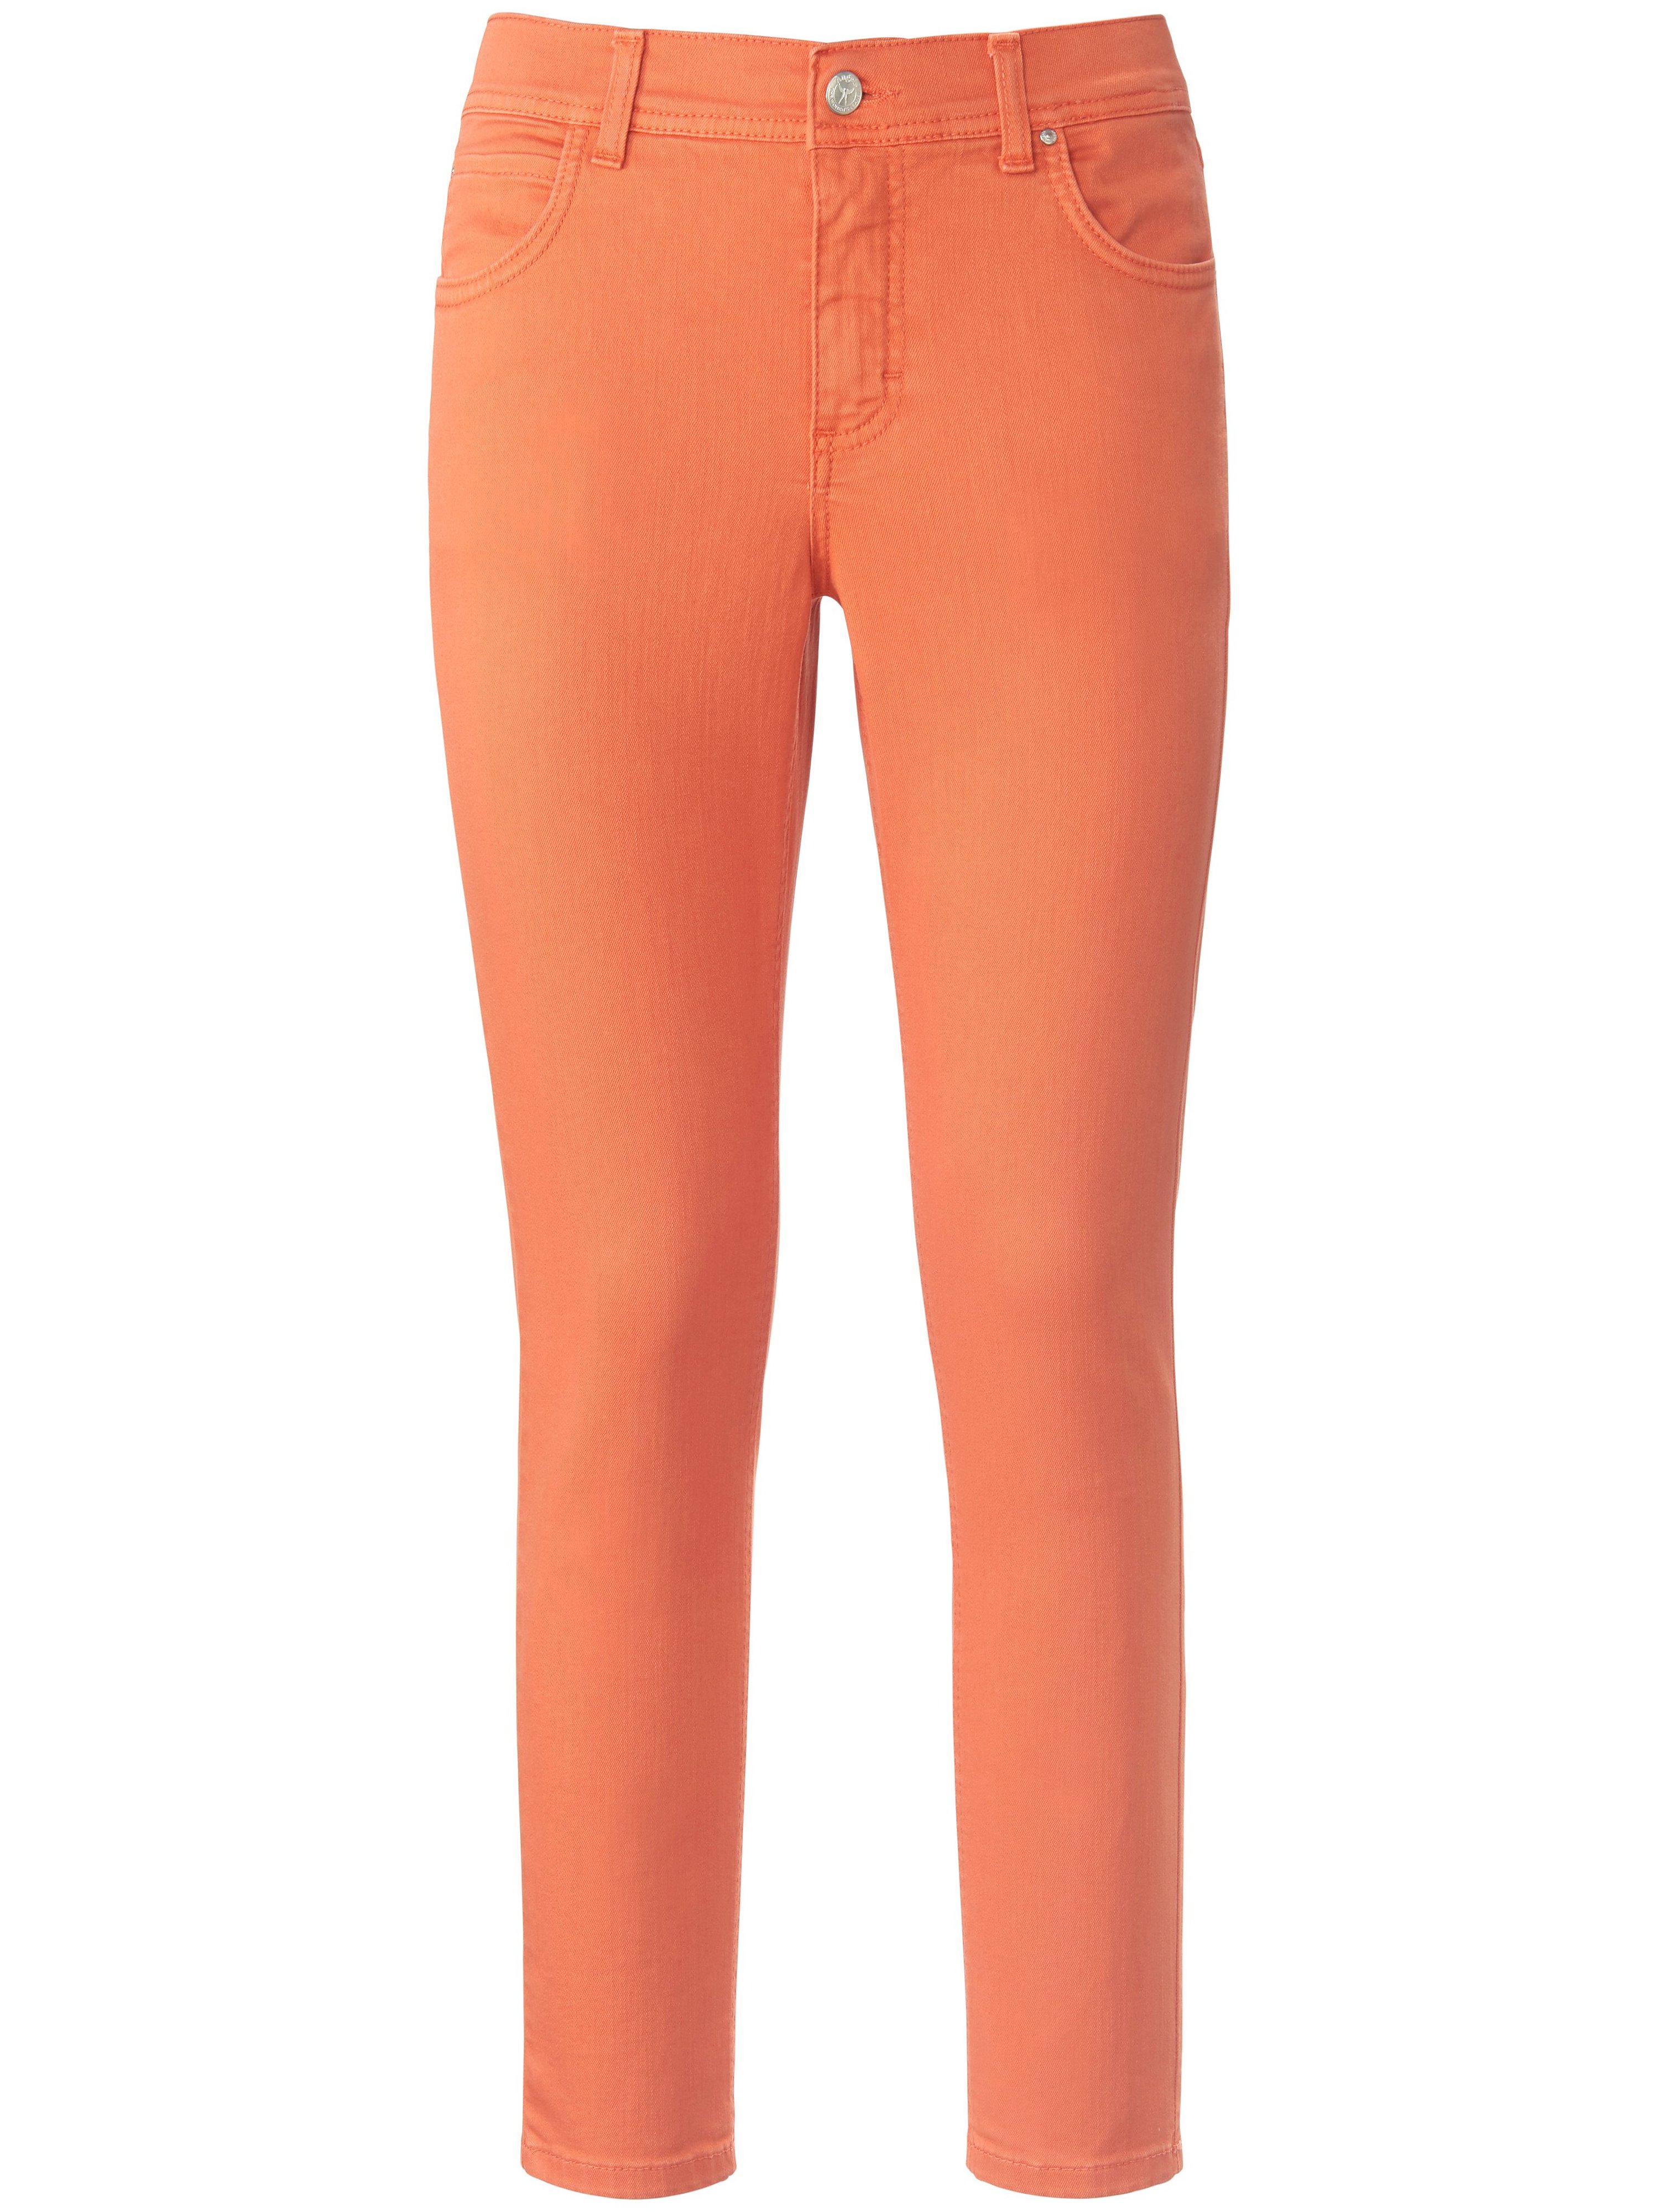 Le jean modèle Ornella  ANGELS orange taille 48